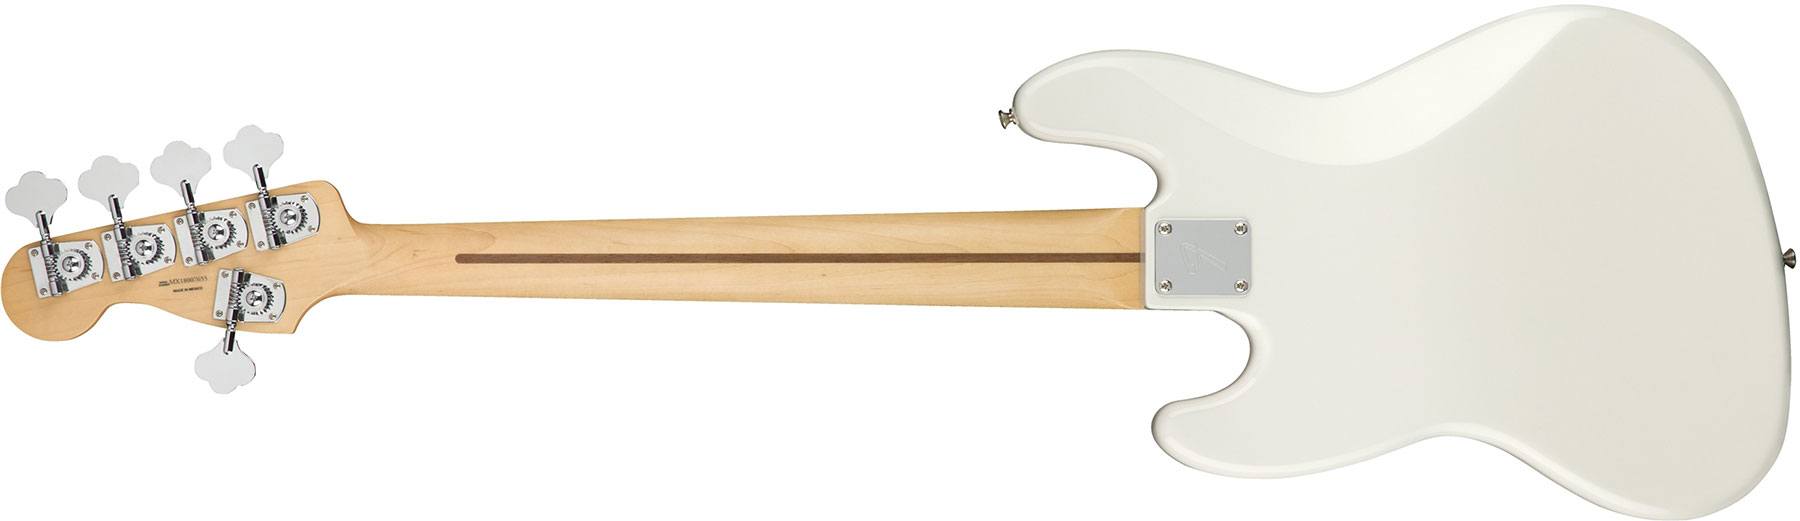 Fender Jazz Bass Player V 5-cordes Mex Pf - Polar White - Basse Électrique Solid Body - Variation 1